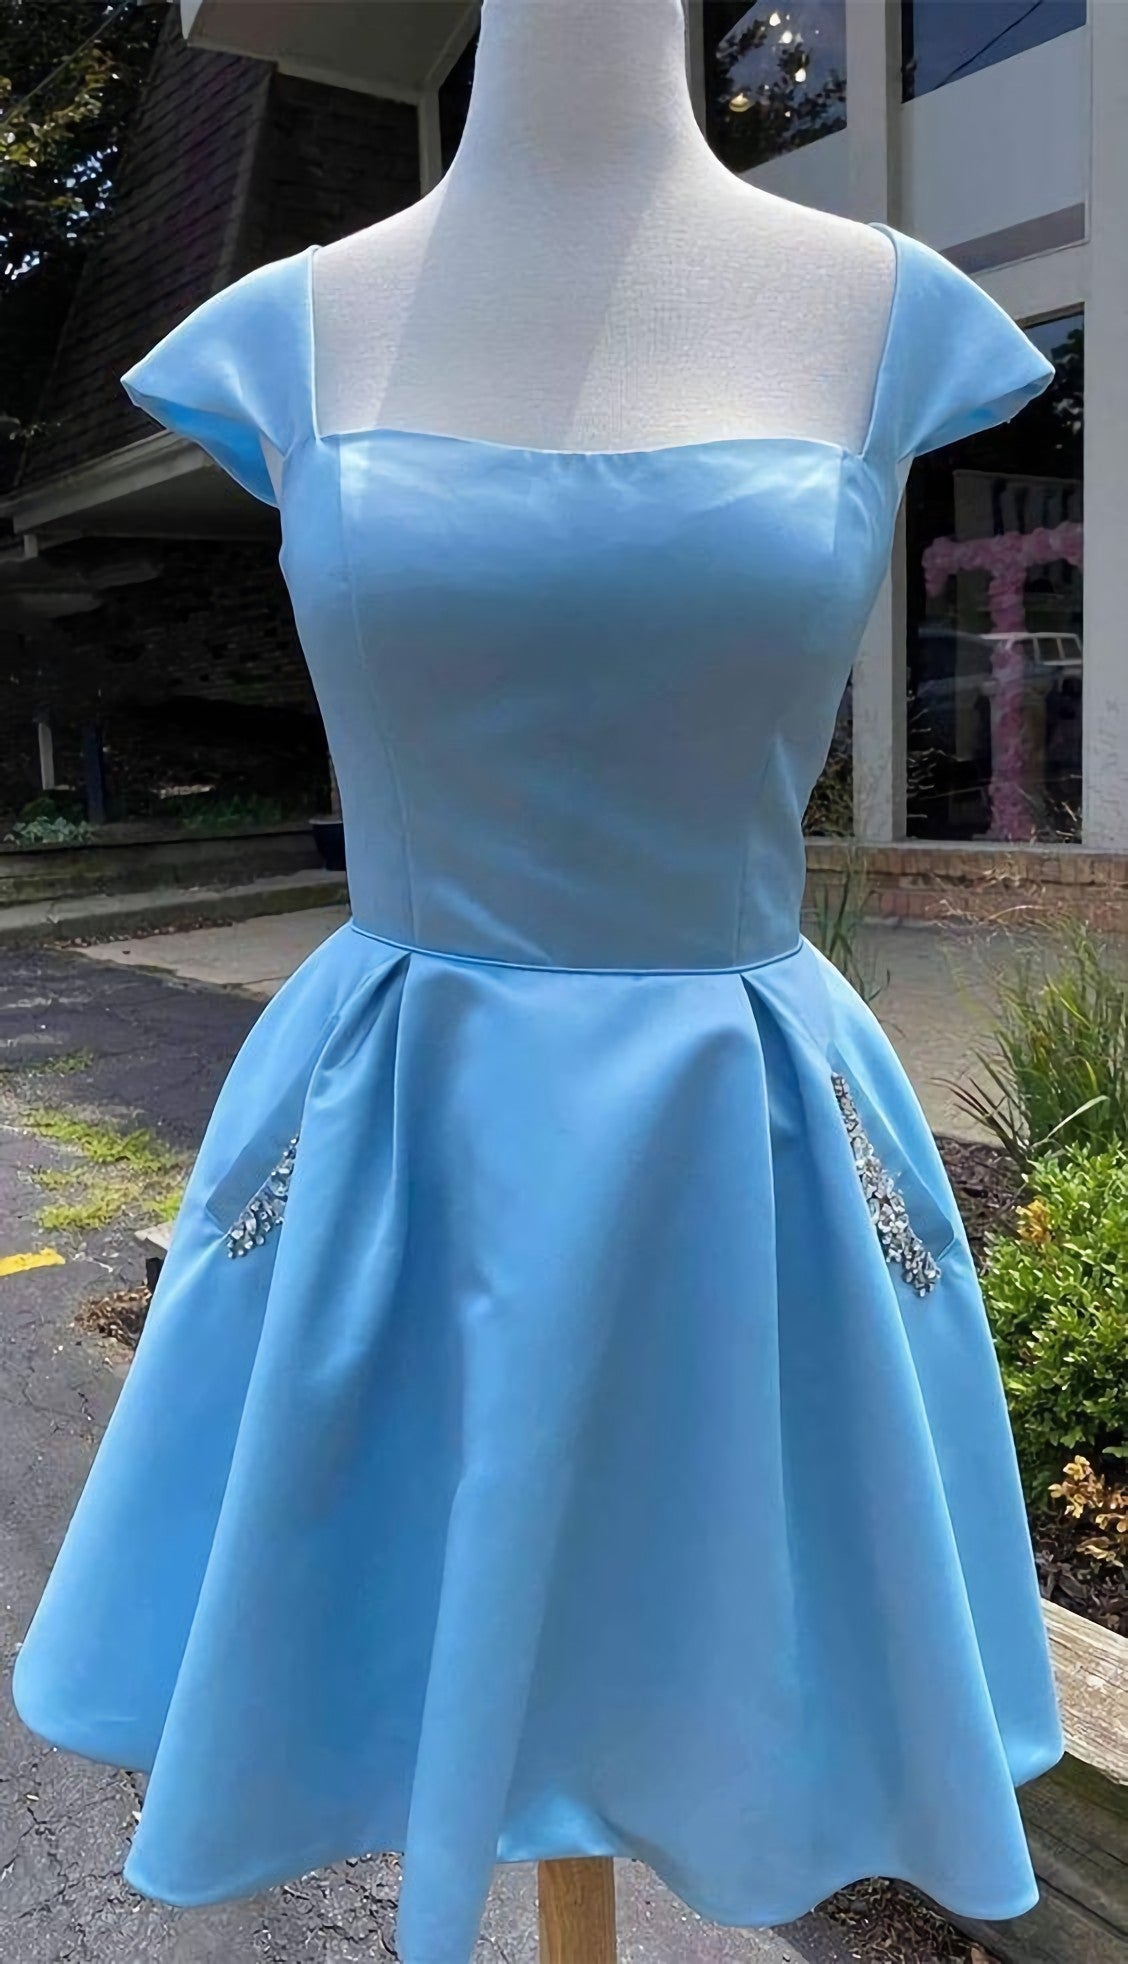 Cap Sleeves Light Blue Satin Short Homecoming Dress, With Beaded Bodice